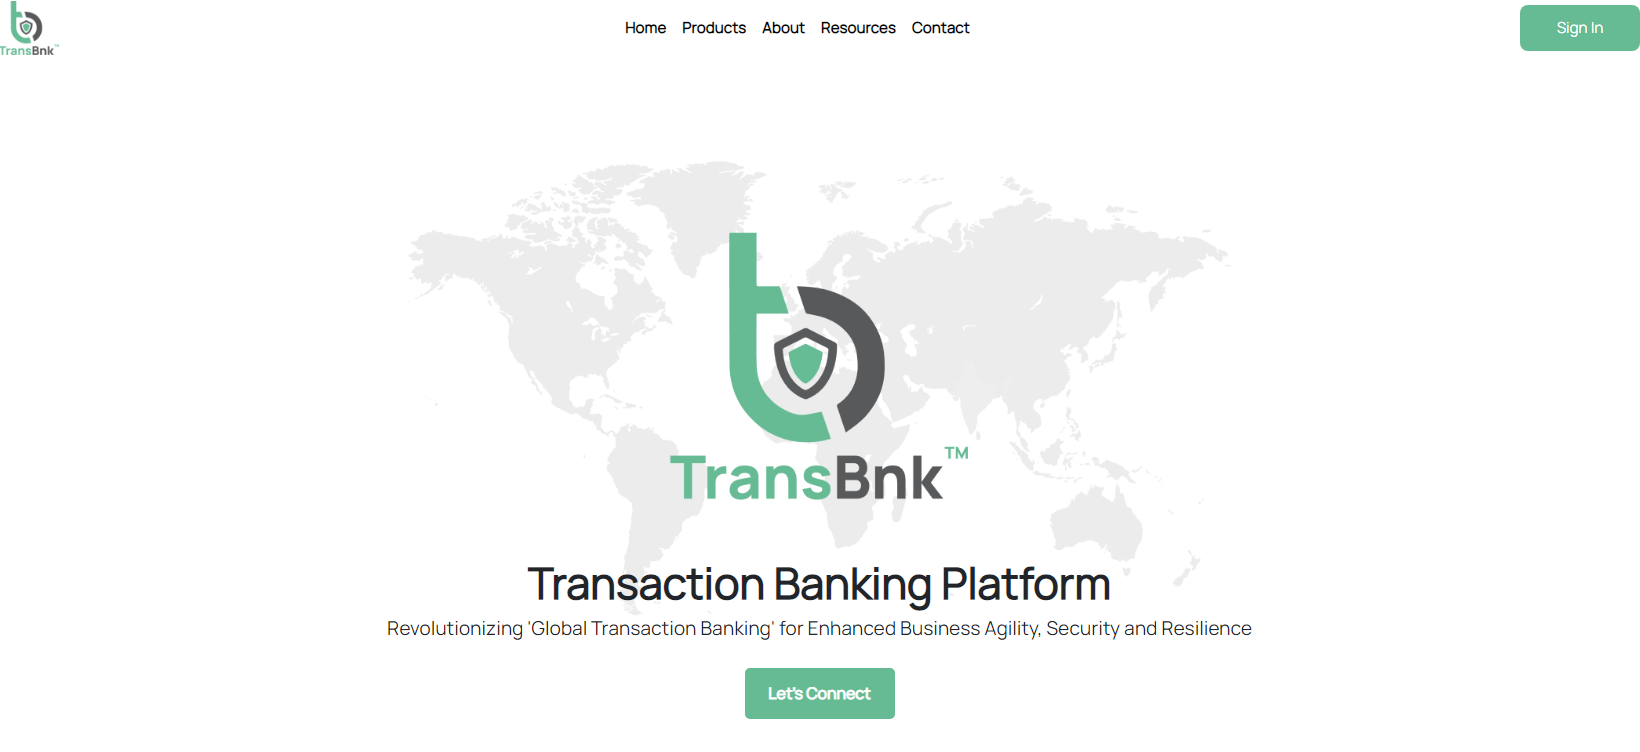 TransBnk Secures $1 Million in Seed Funding to Revolutionize Transaction Banking Platform